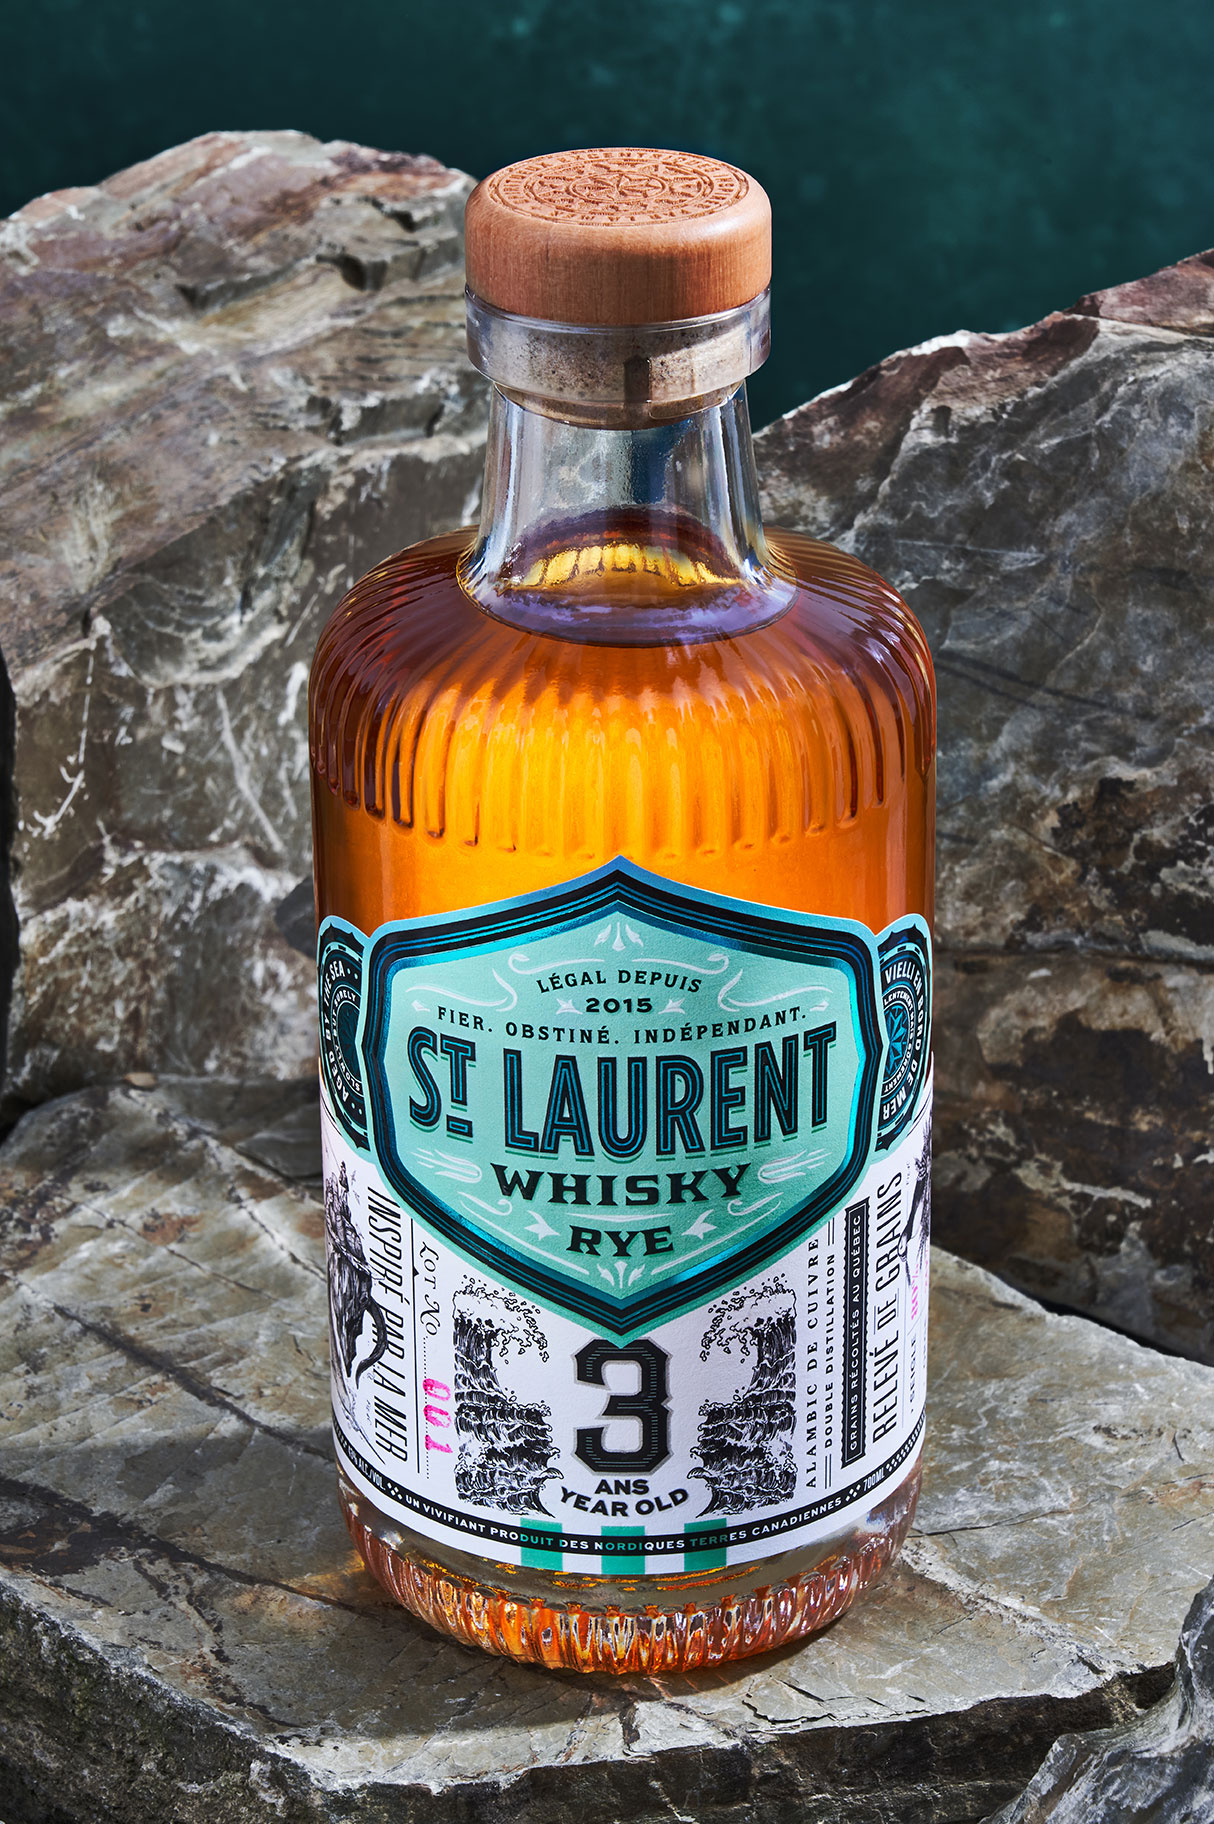 St. Laurent Whisky package design